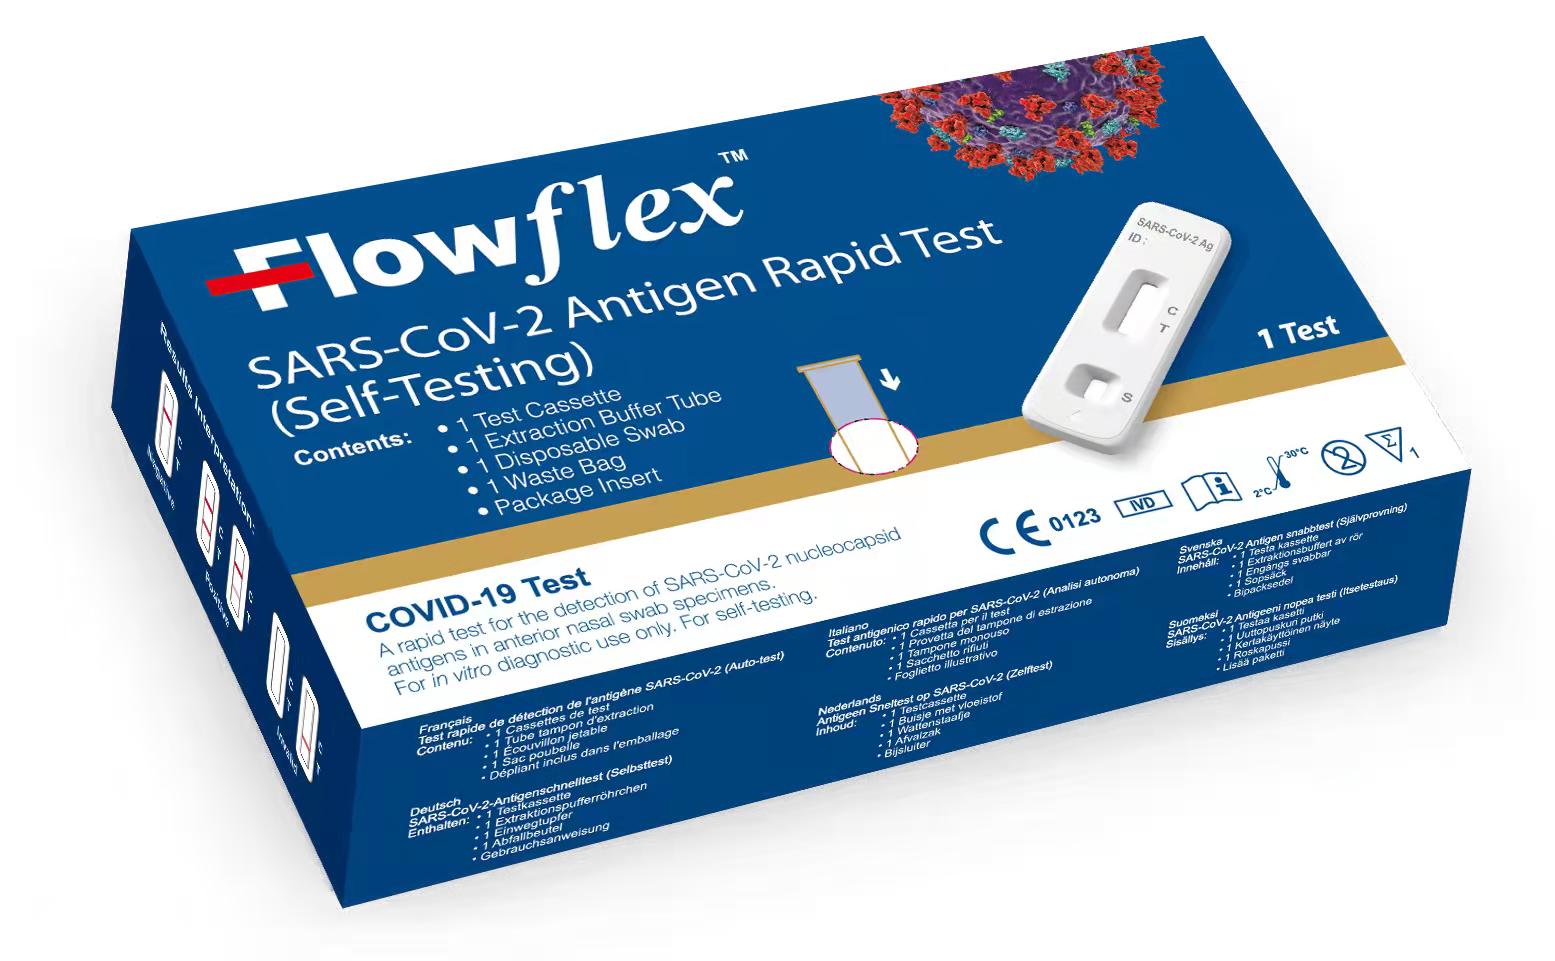 Flowflex COVID-19 Antigen Rapid Test 1er Self-Testing CE